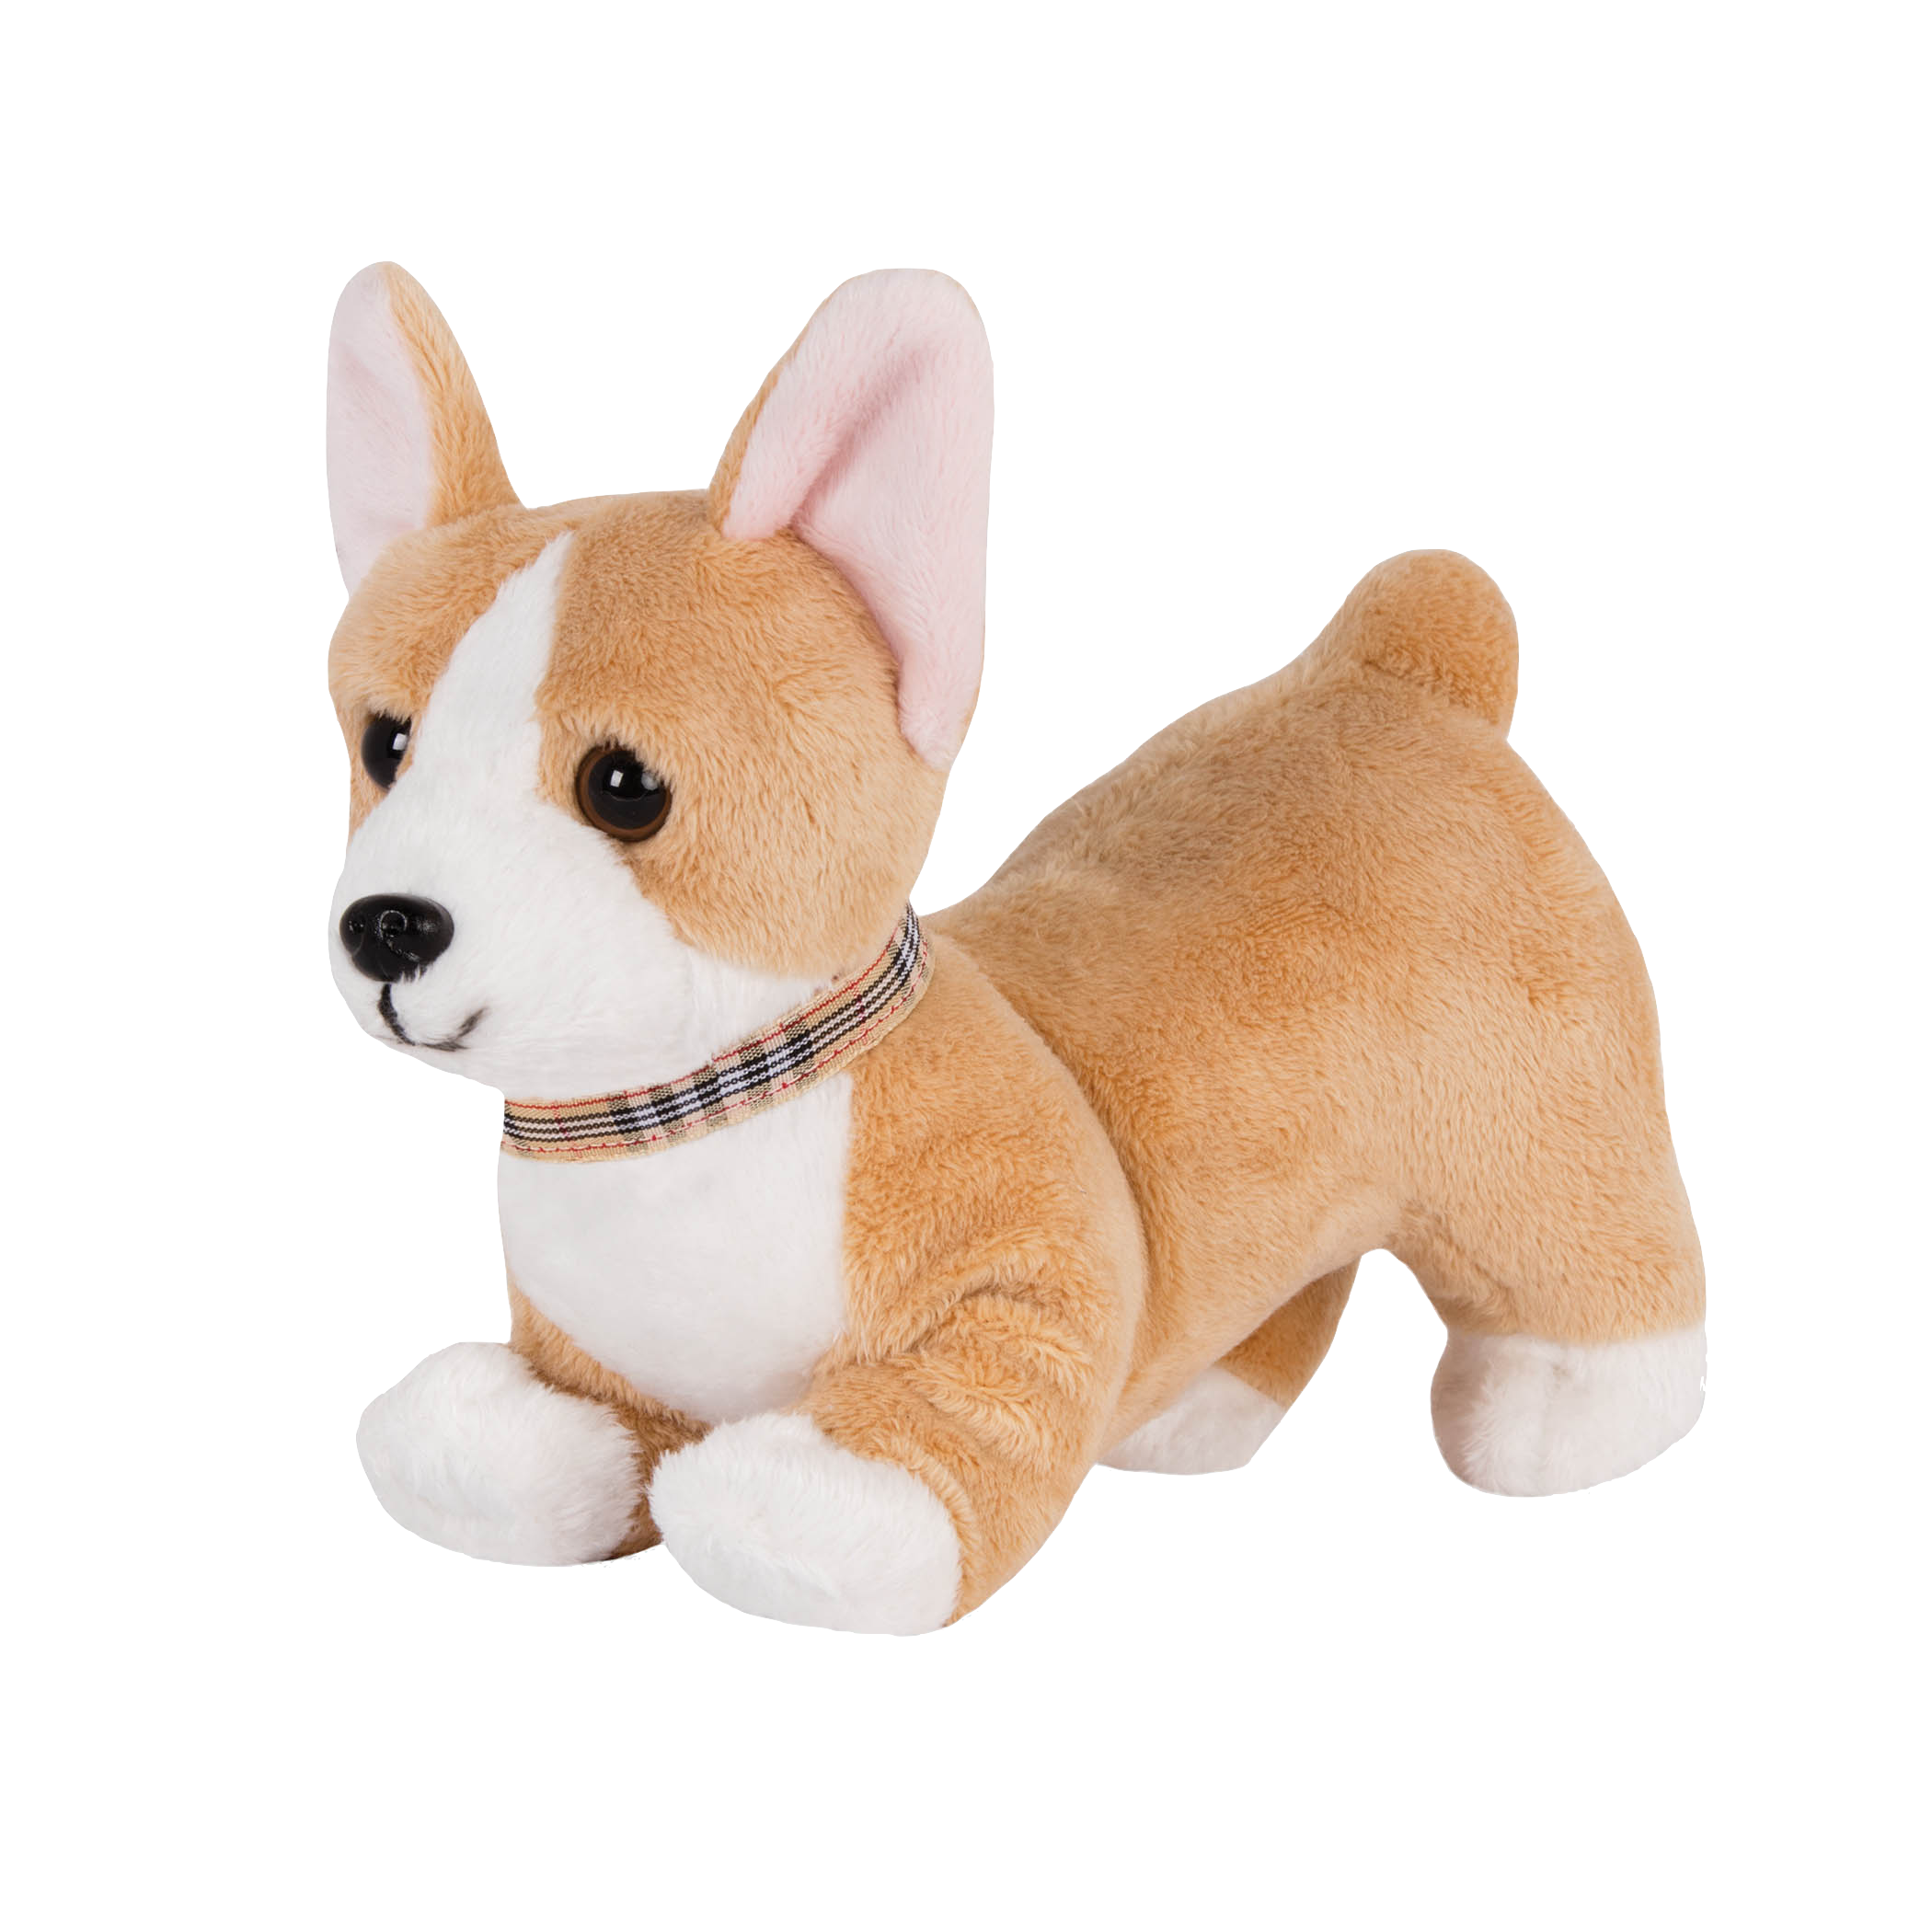 Posable Corgi Pup 6-inch Toy Dog